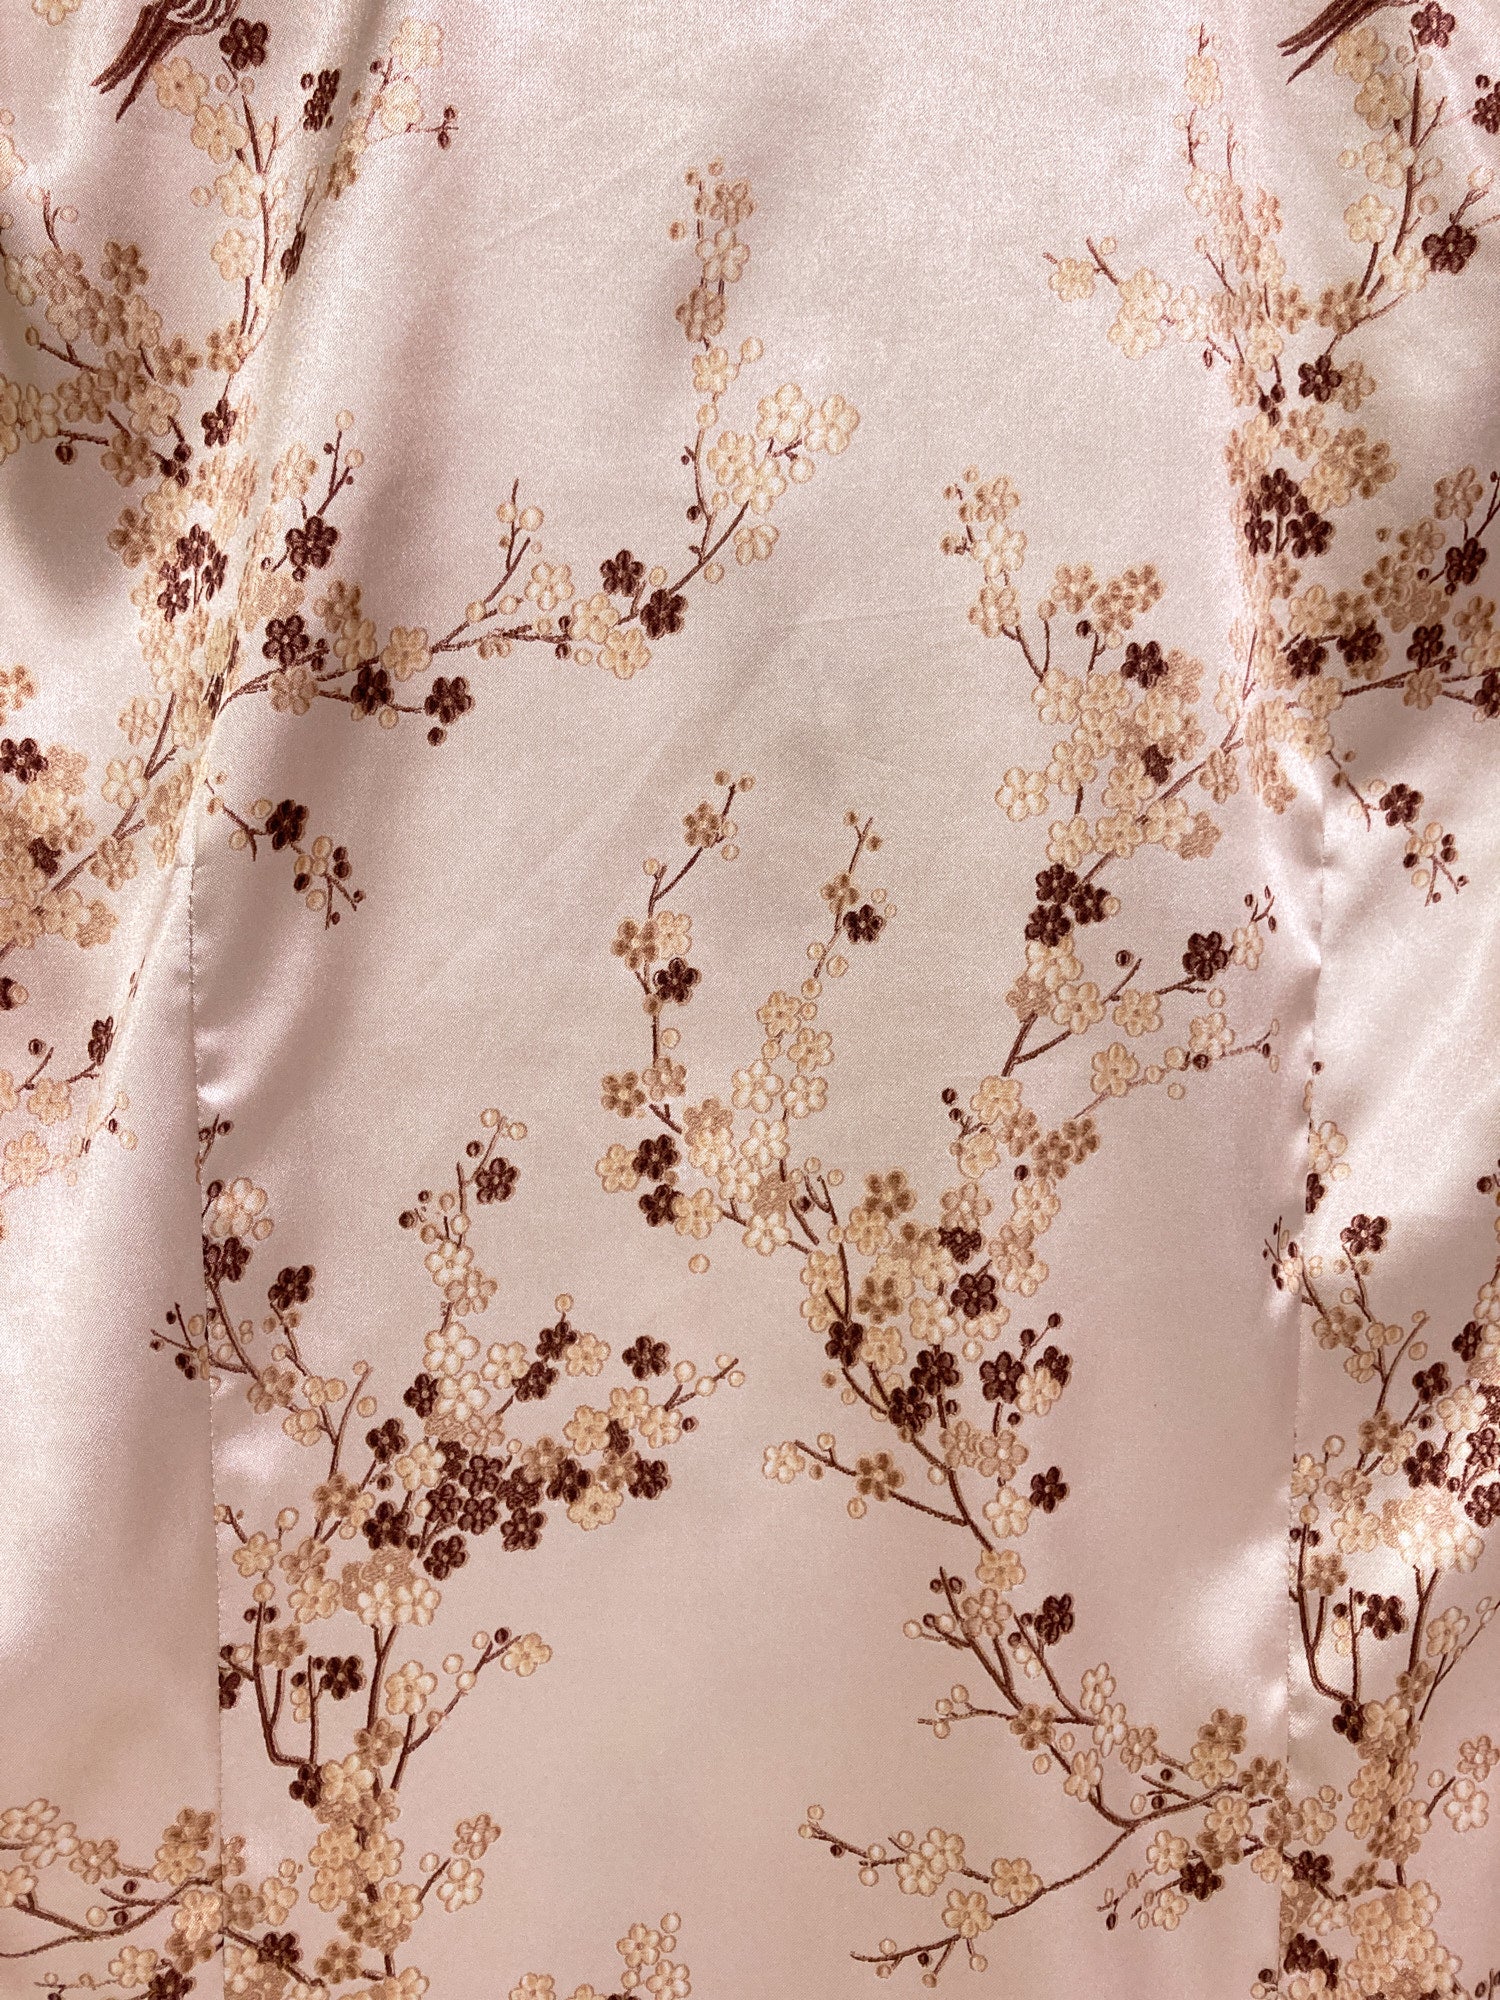 Jean Colonna AW1998 beige satin cherry blossom print long sleeve shirt - size 40